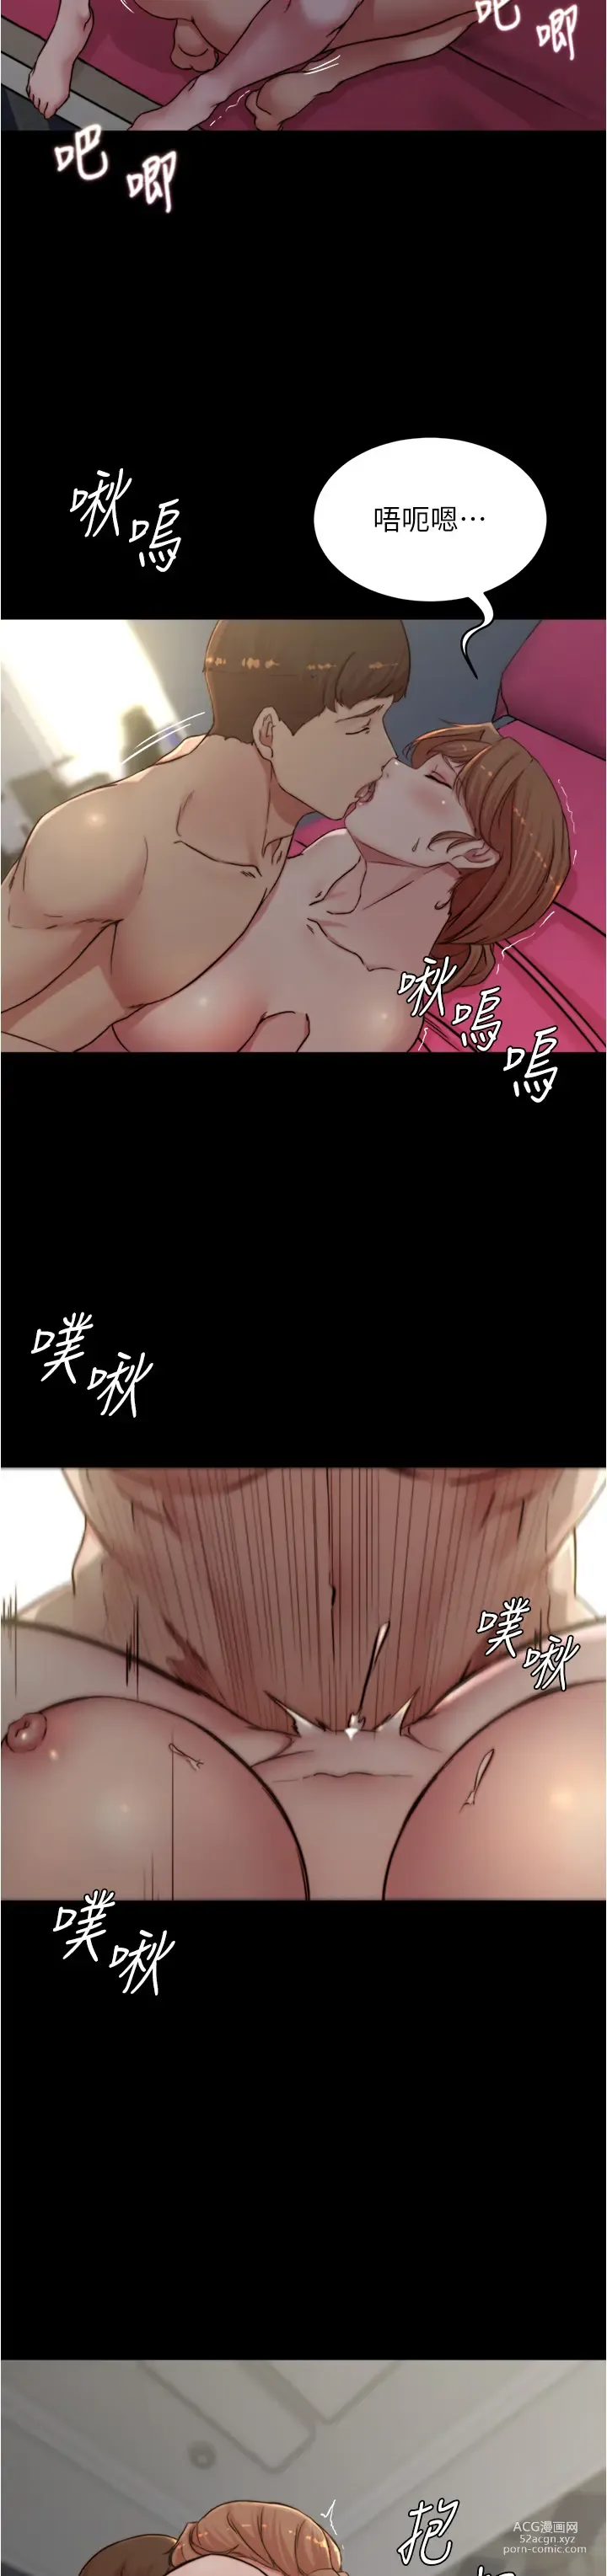 Page 1508 of manga 小裤裤笔记 小褲褲筆記 panty note 36-80